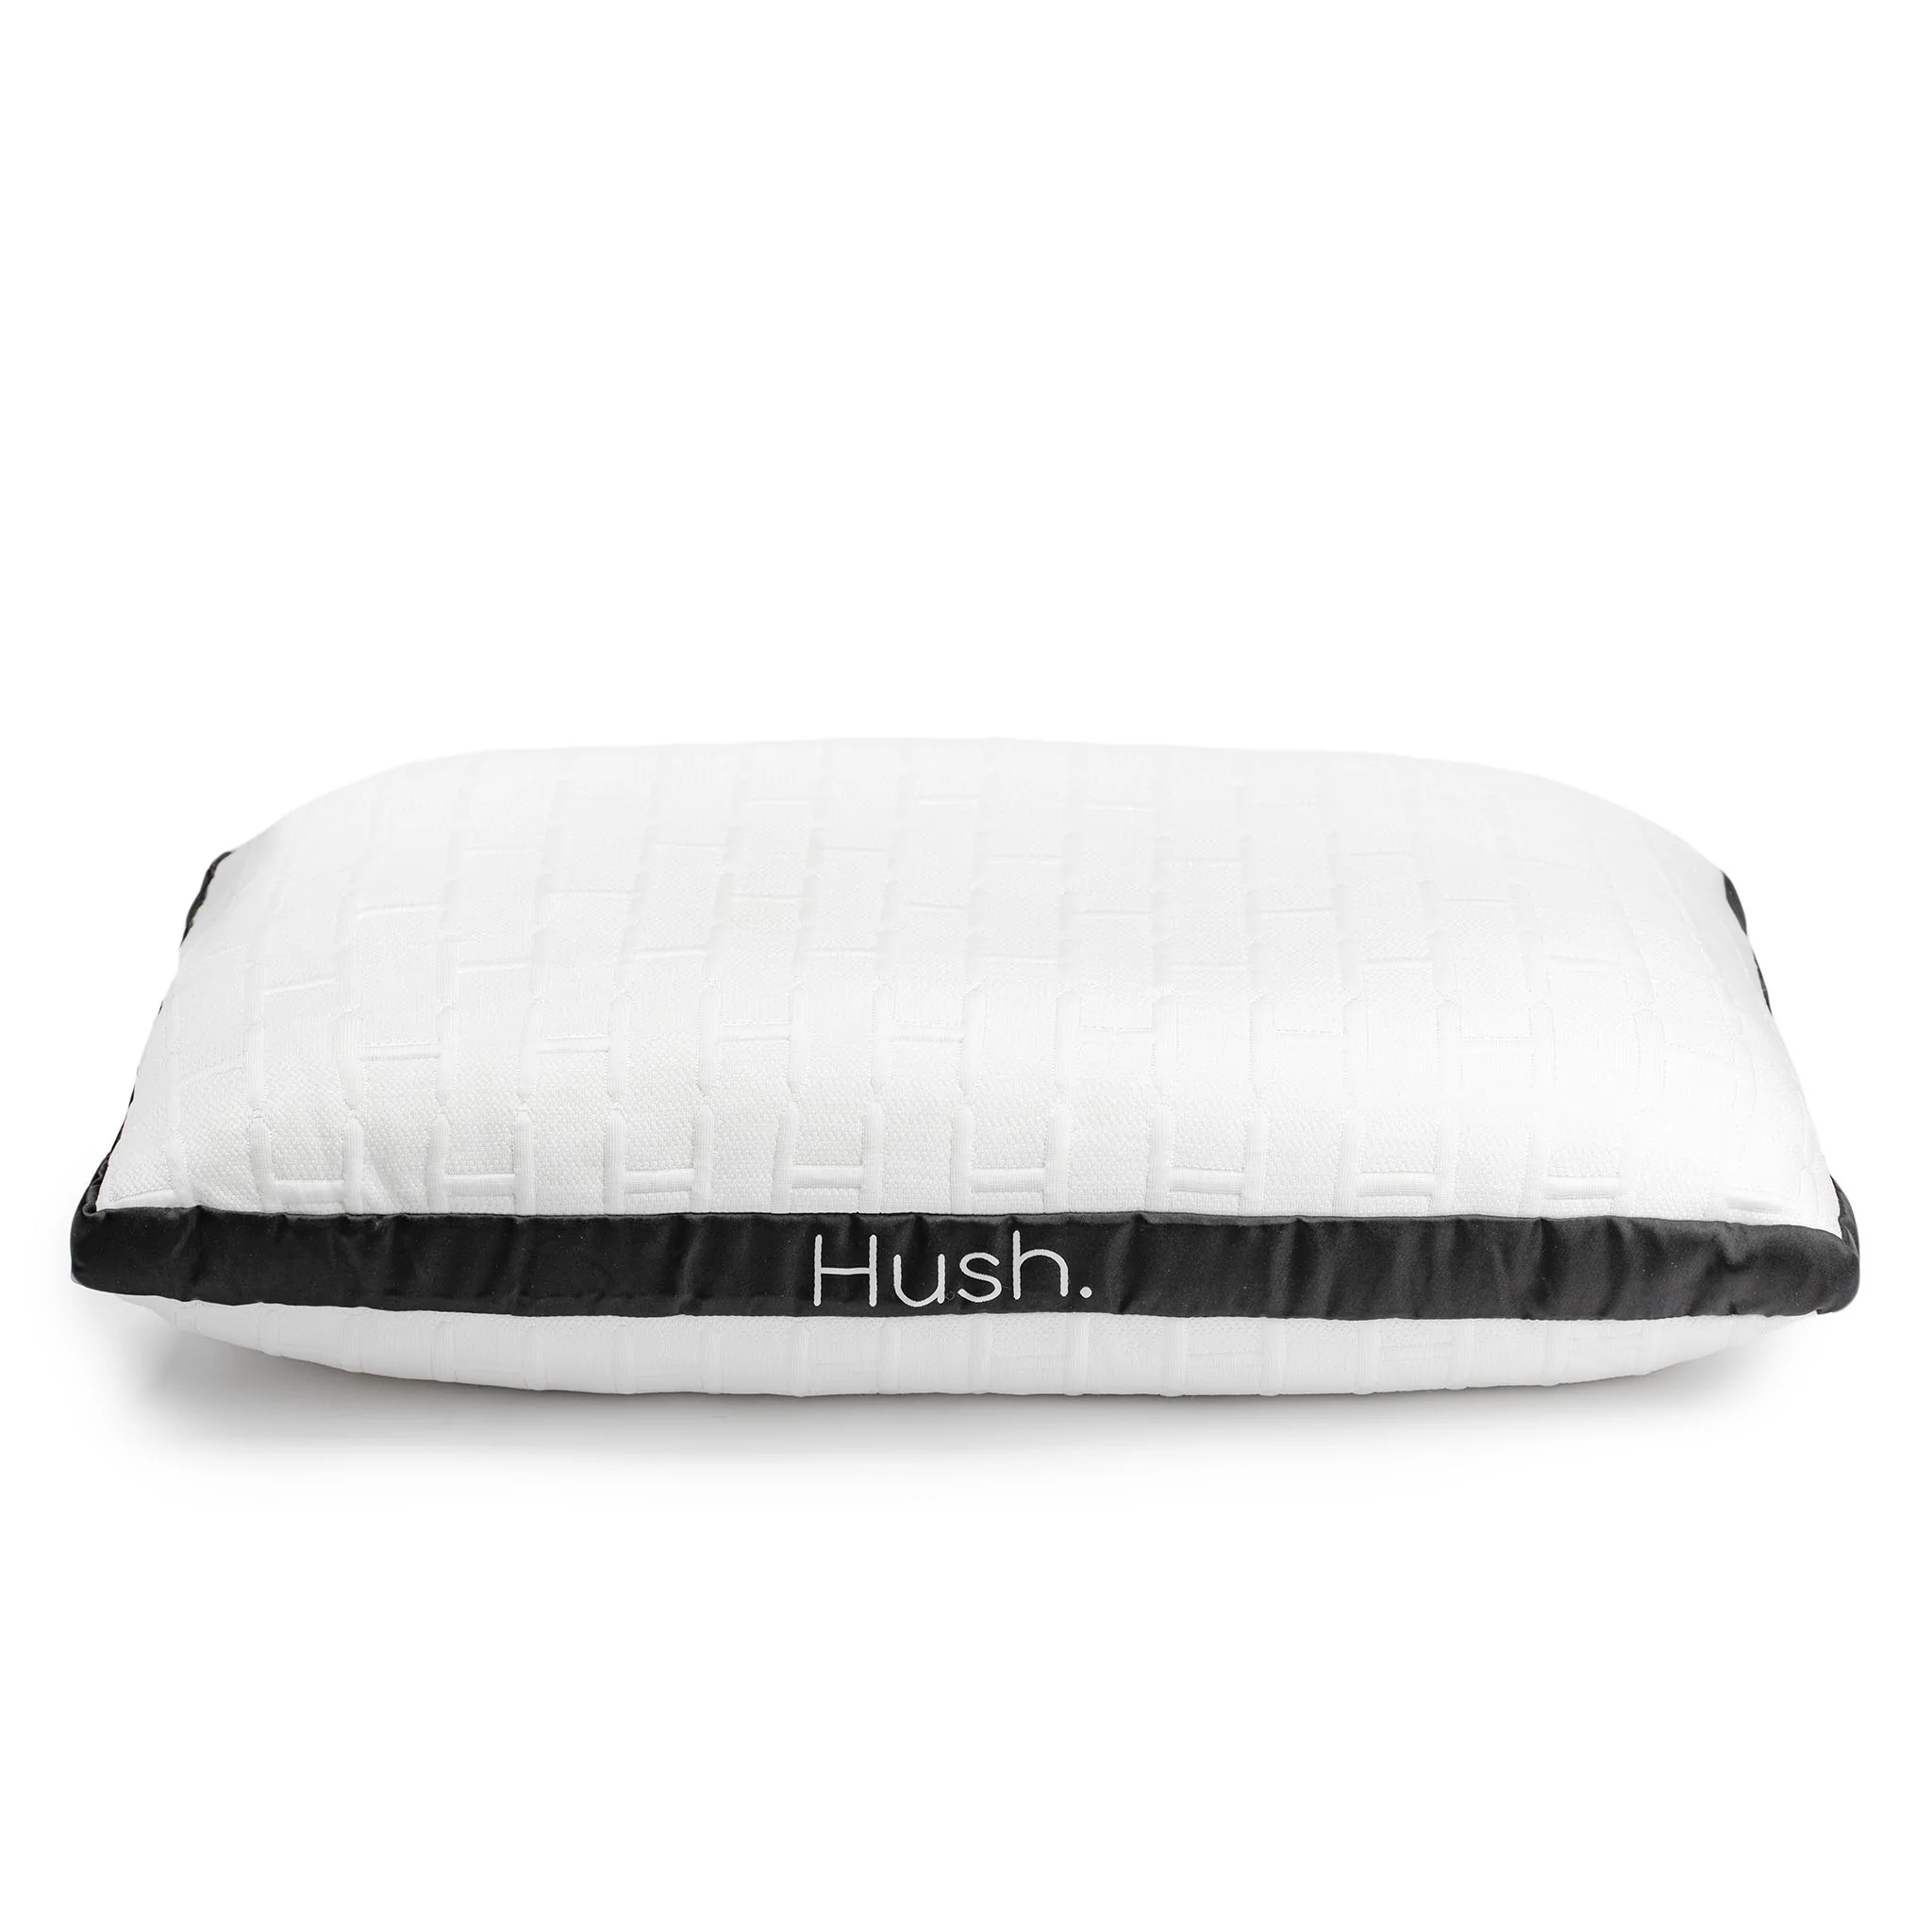 Hush Hybrid Pillow Review